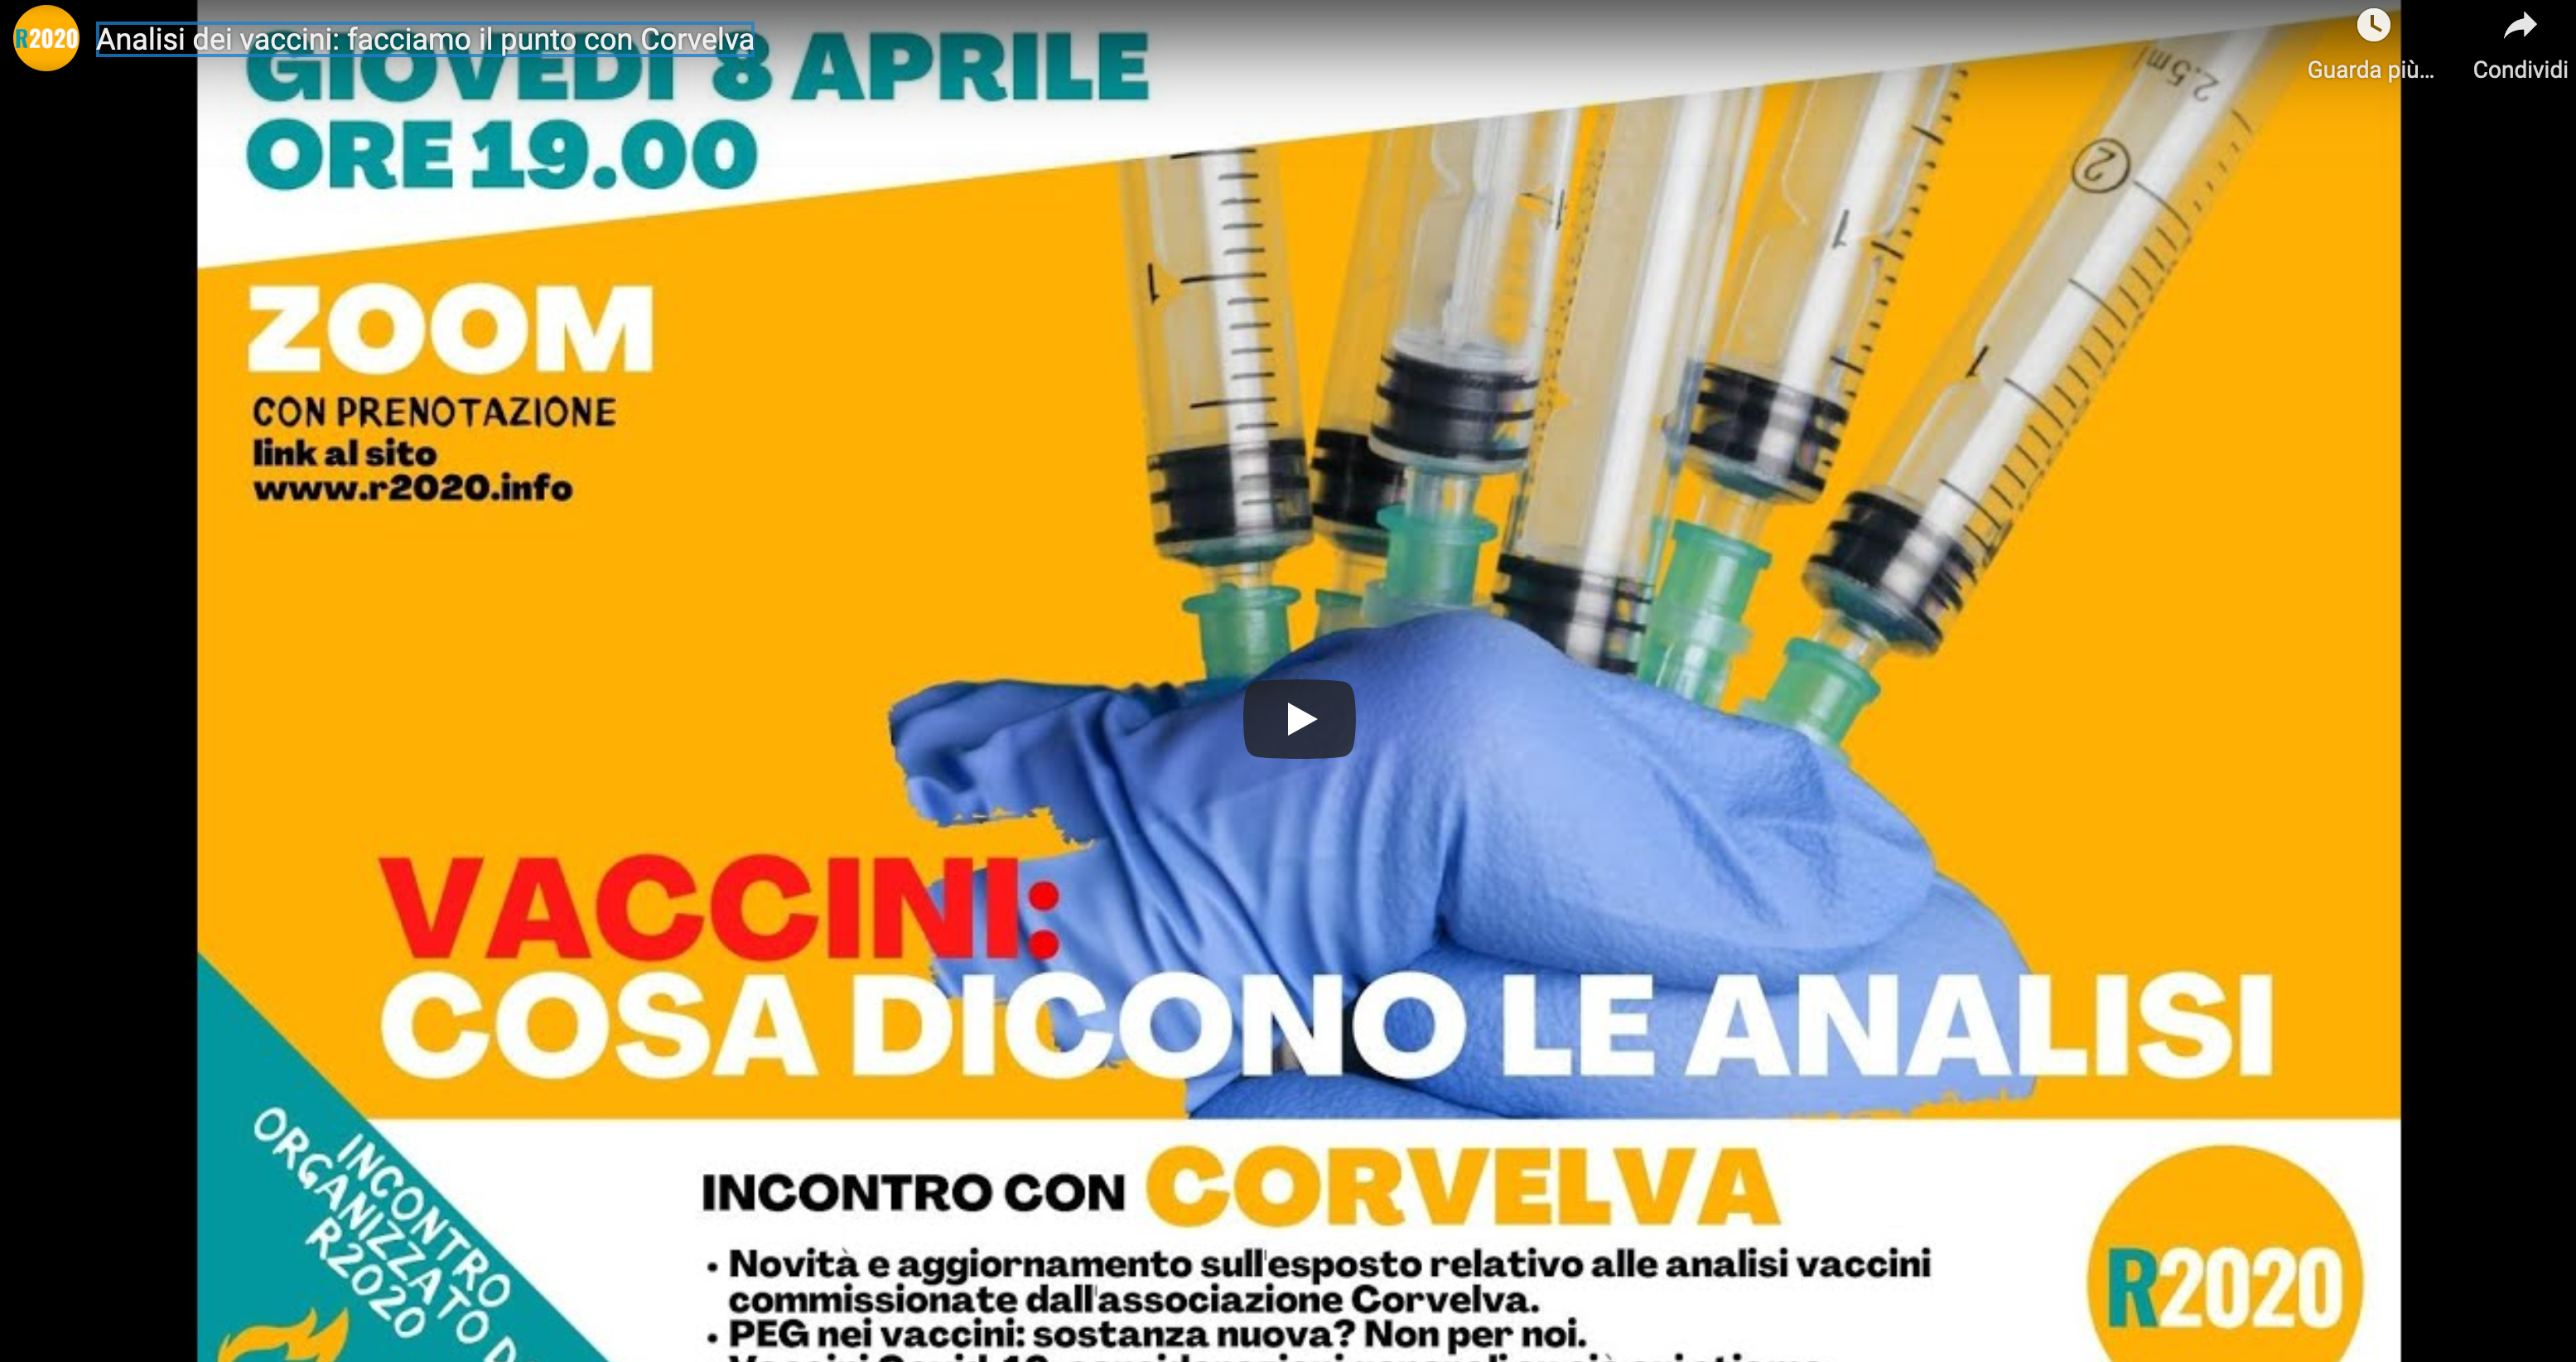 Vaccine analysis: let's take stock with Corvelva